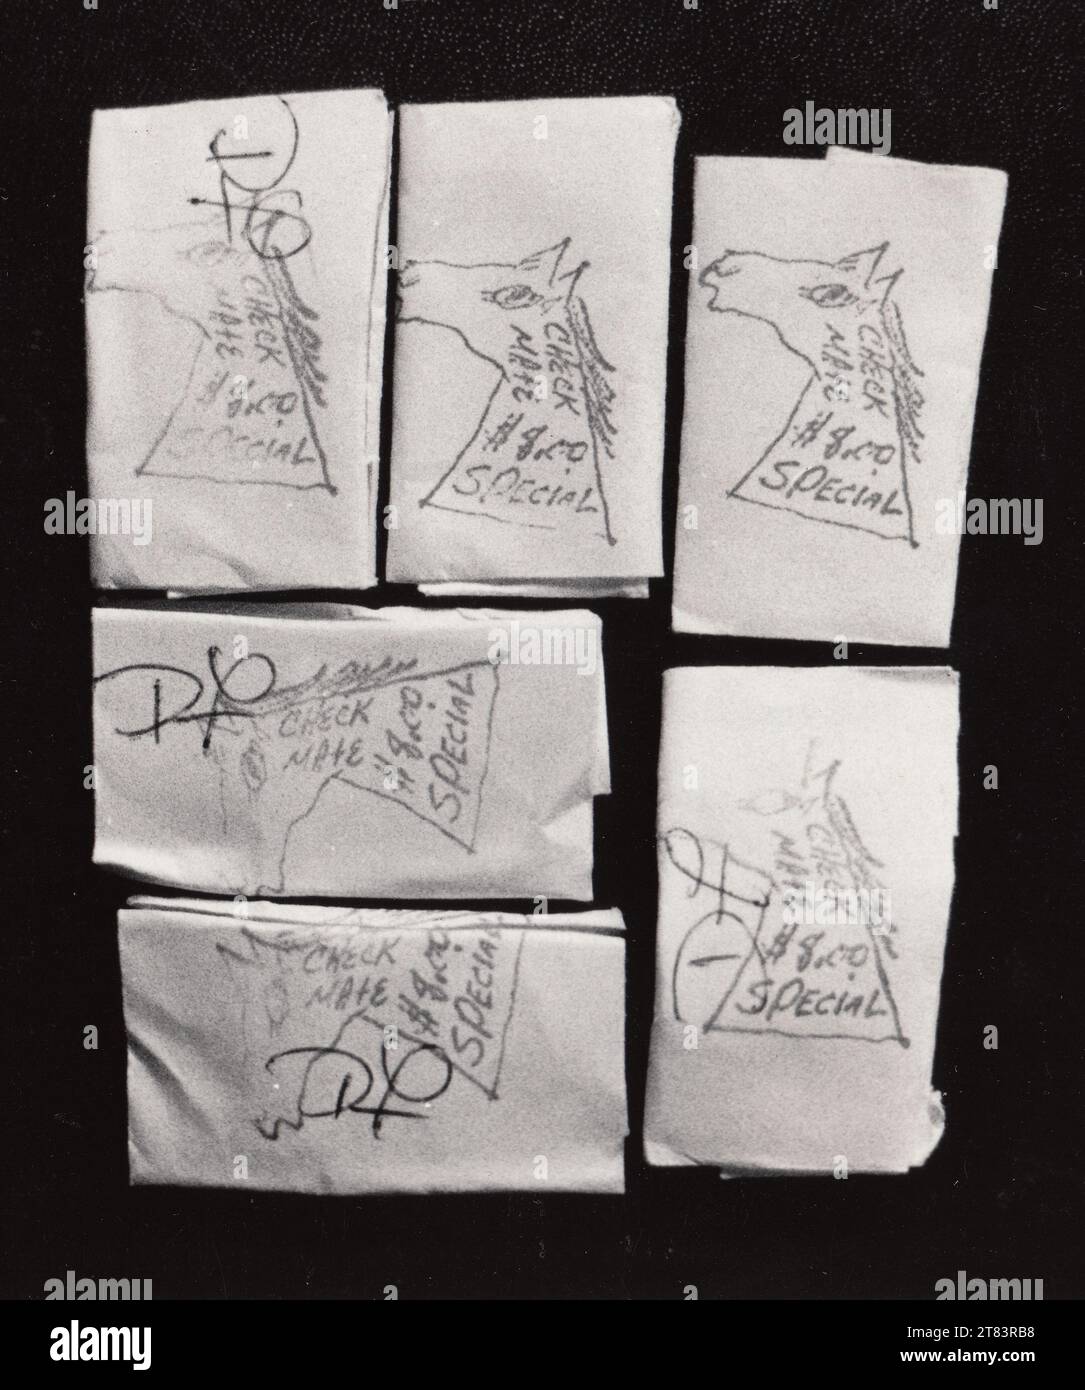 Heroin, Packungen Checkmate Heroin. Altes Pressefoto aus den USA. [1983 Pressefoto Drogenmissbrauch Heroin.] Stockfoto